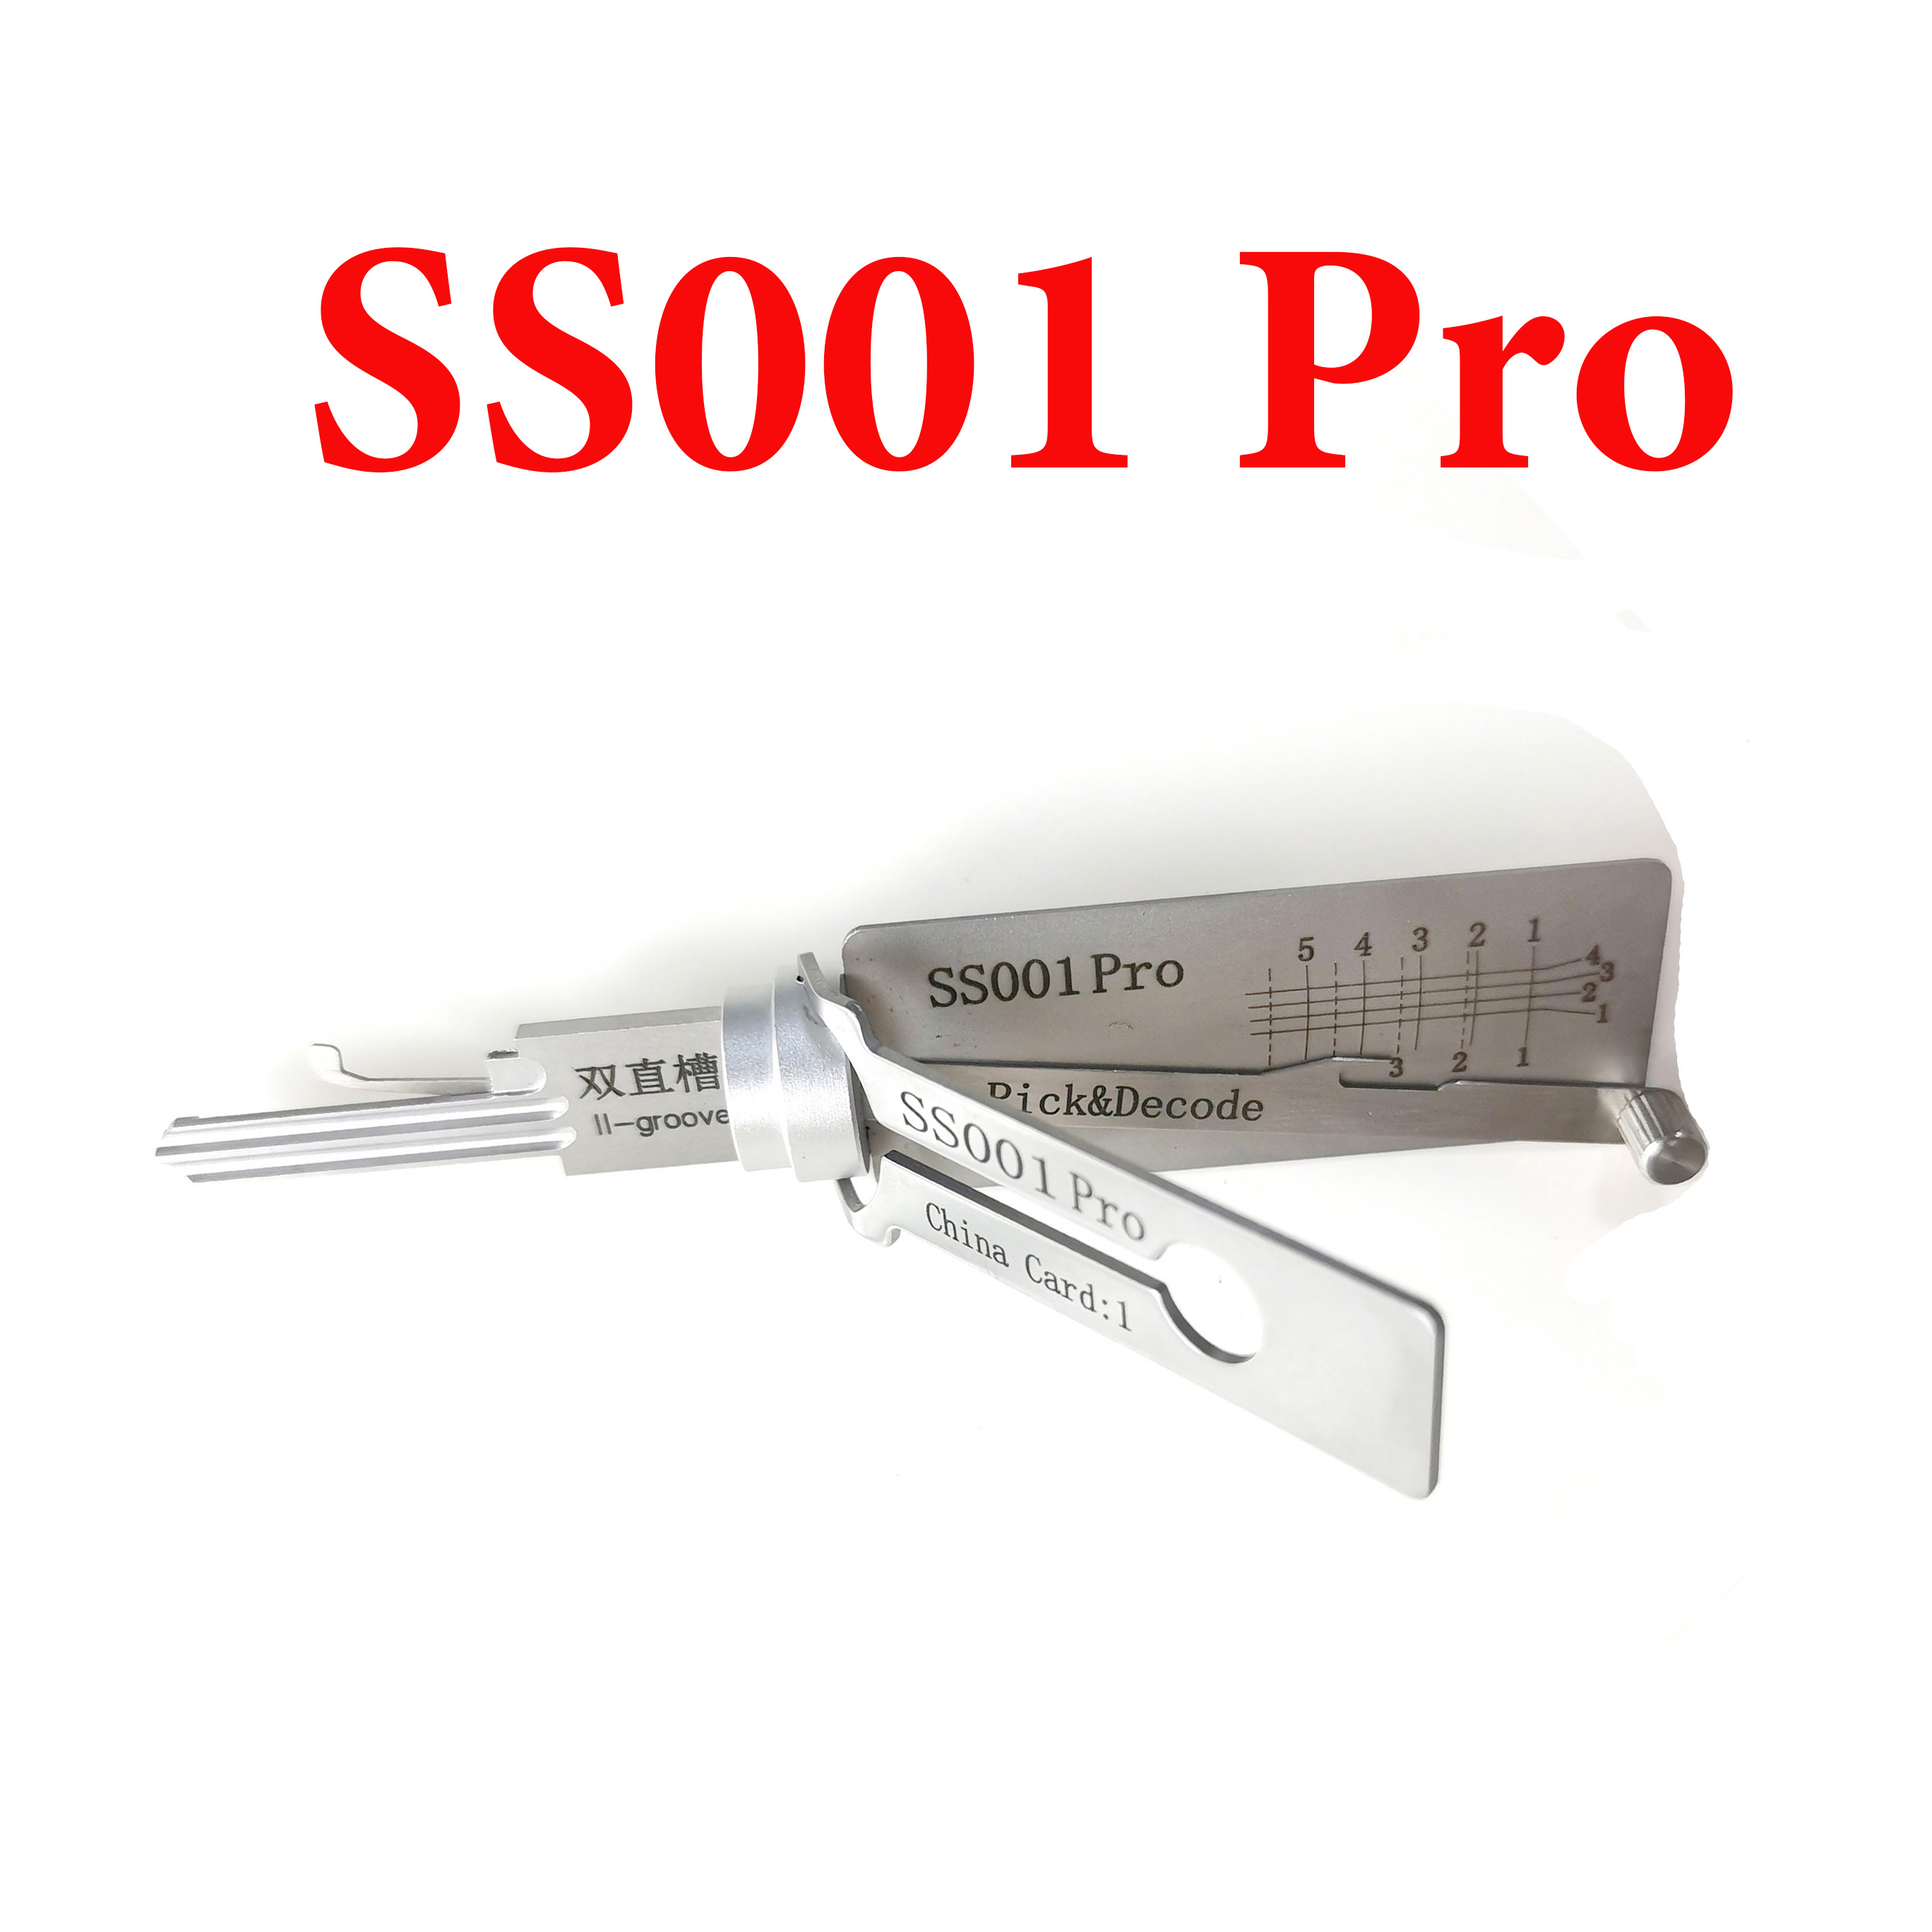 SS001 PRO Locksmith Tool